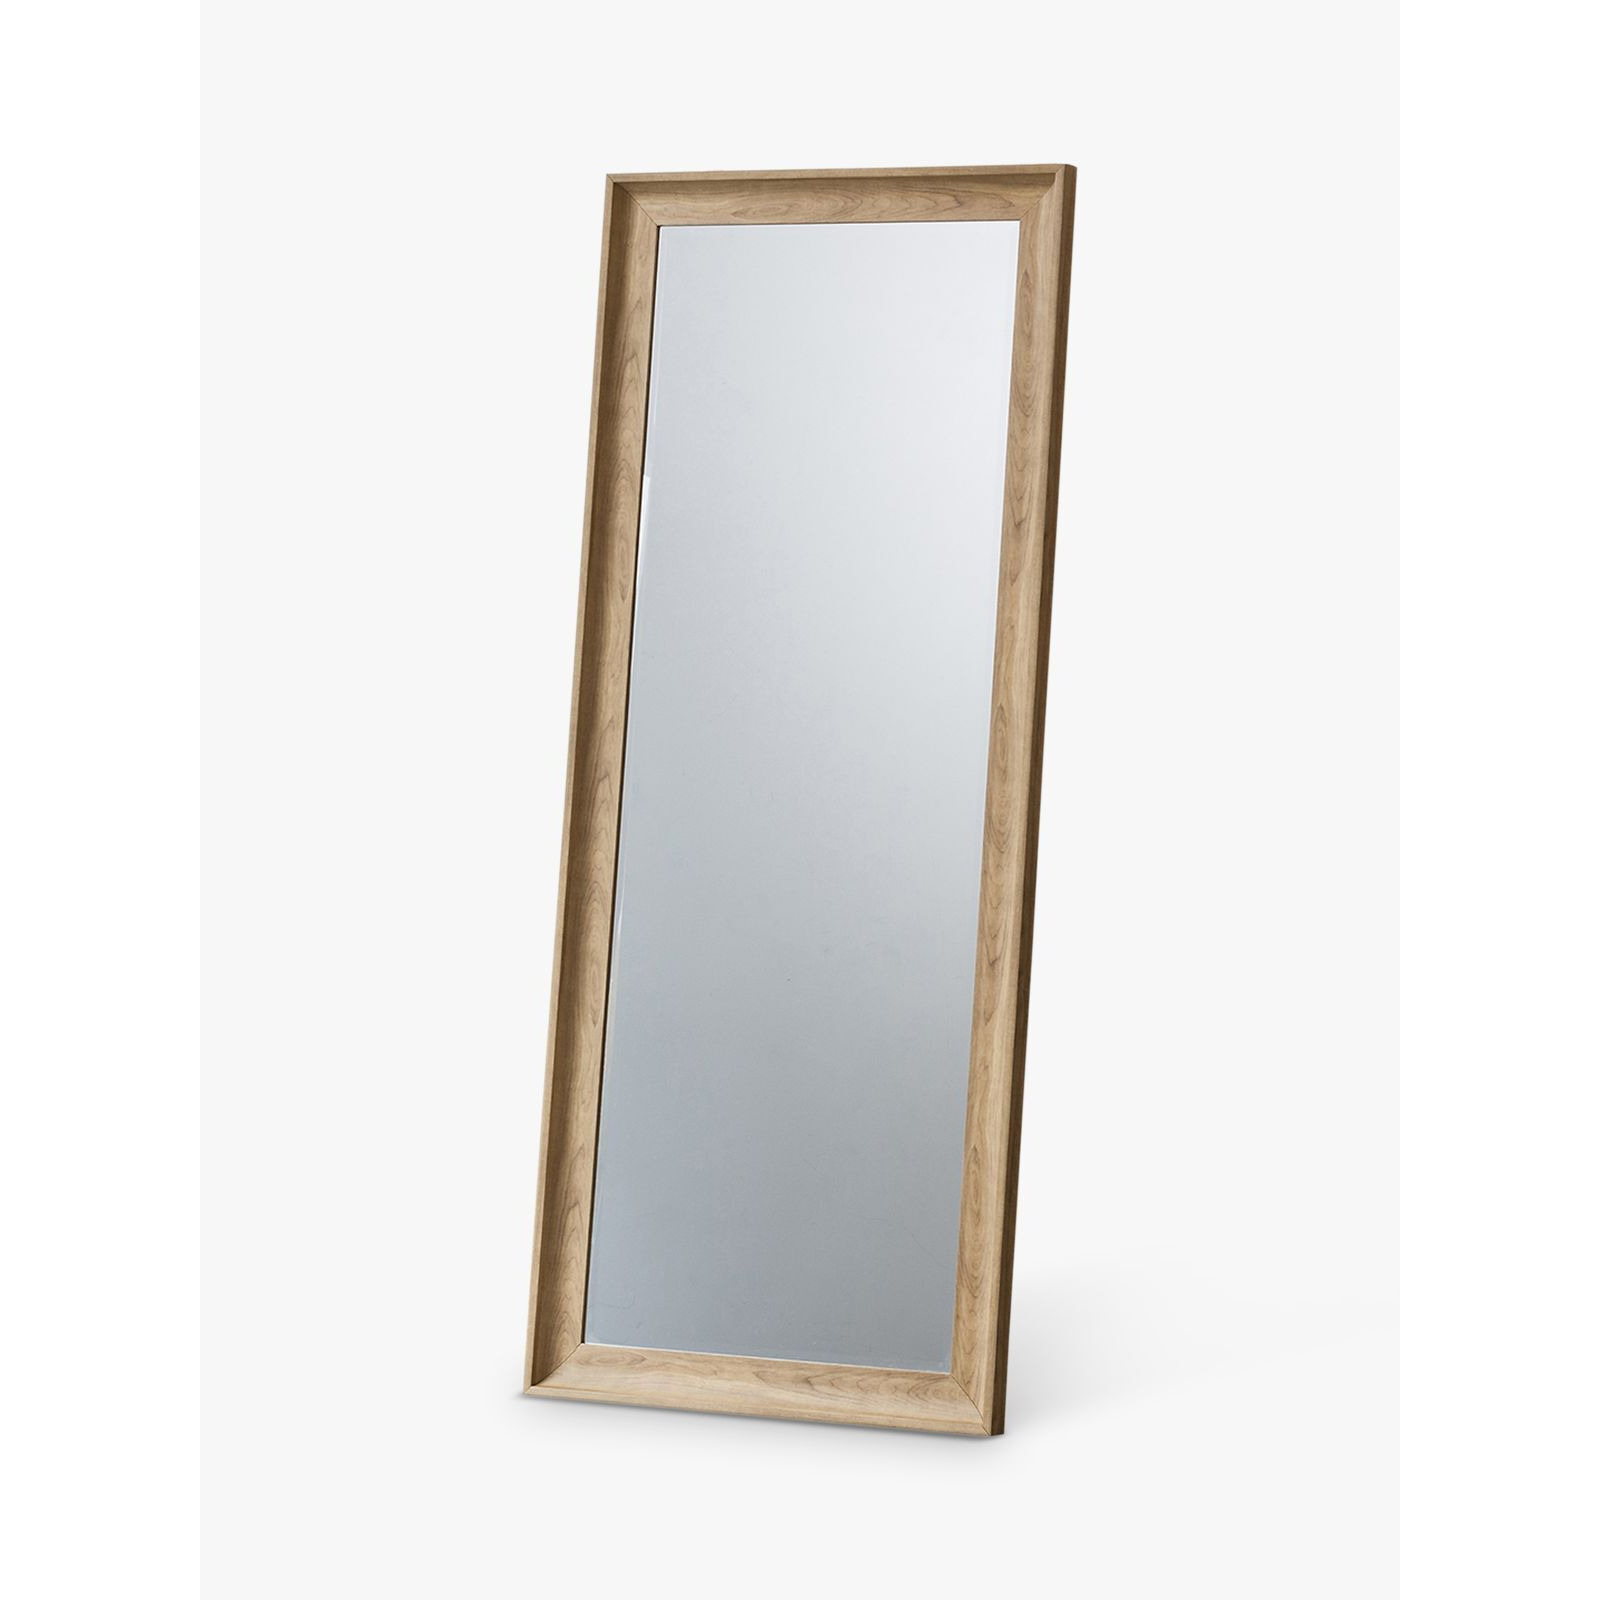 Gallery Direct Fraser Rectangular Wood-Effect Frame Leaner Mirror, 152 x 63.5cm, Oak - image 1